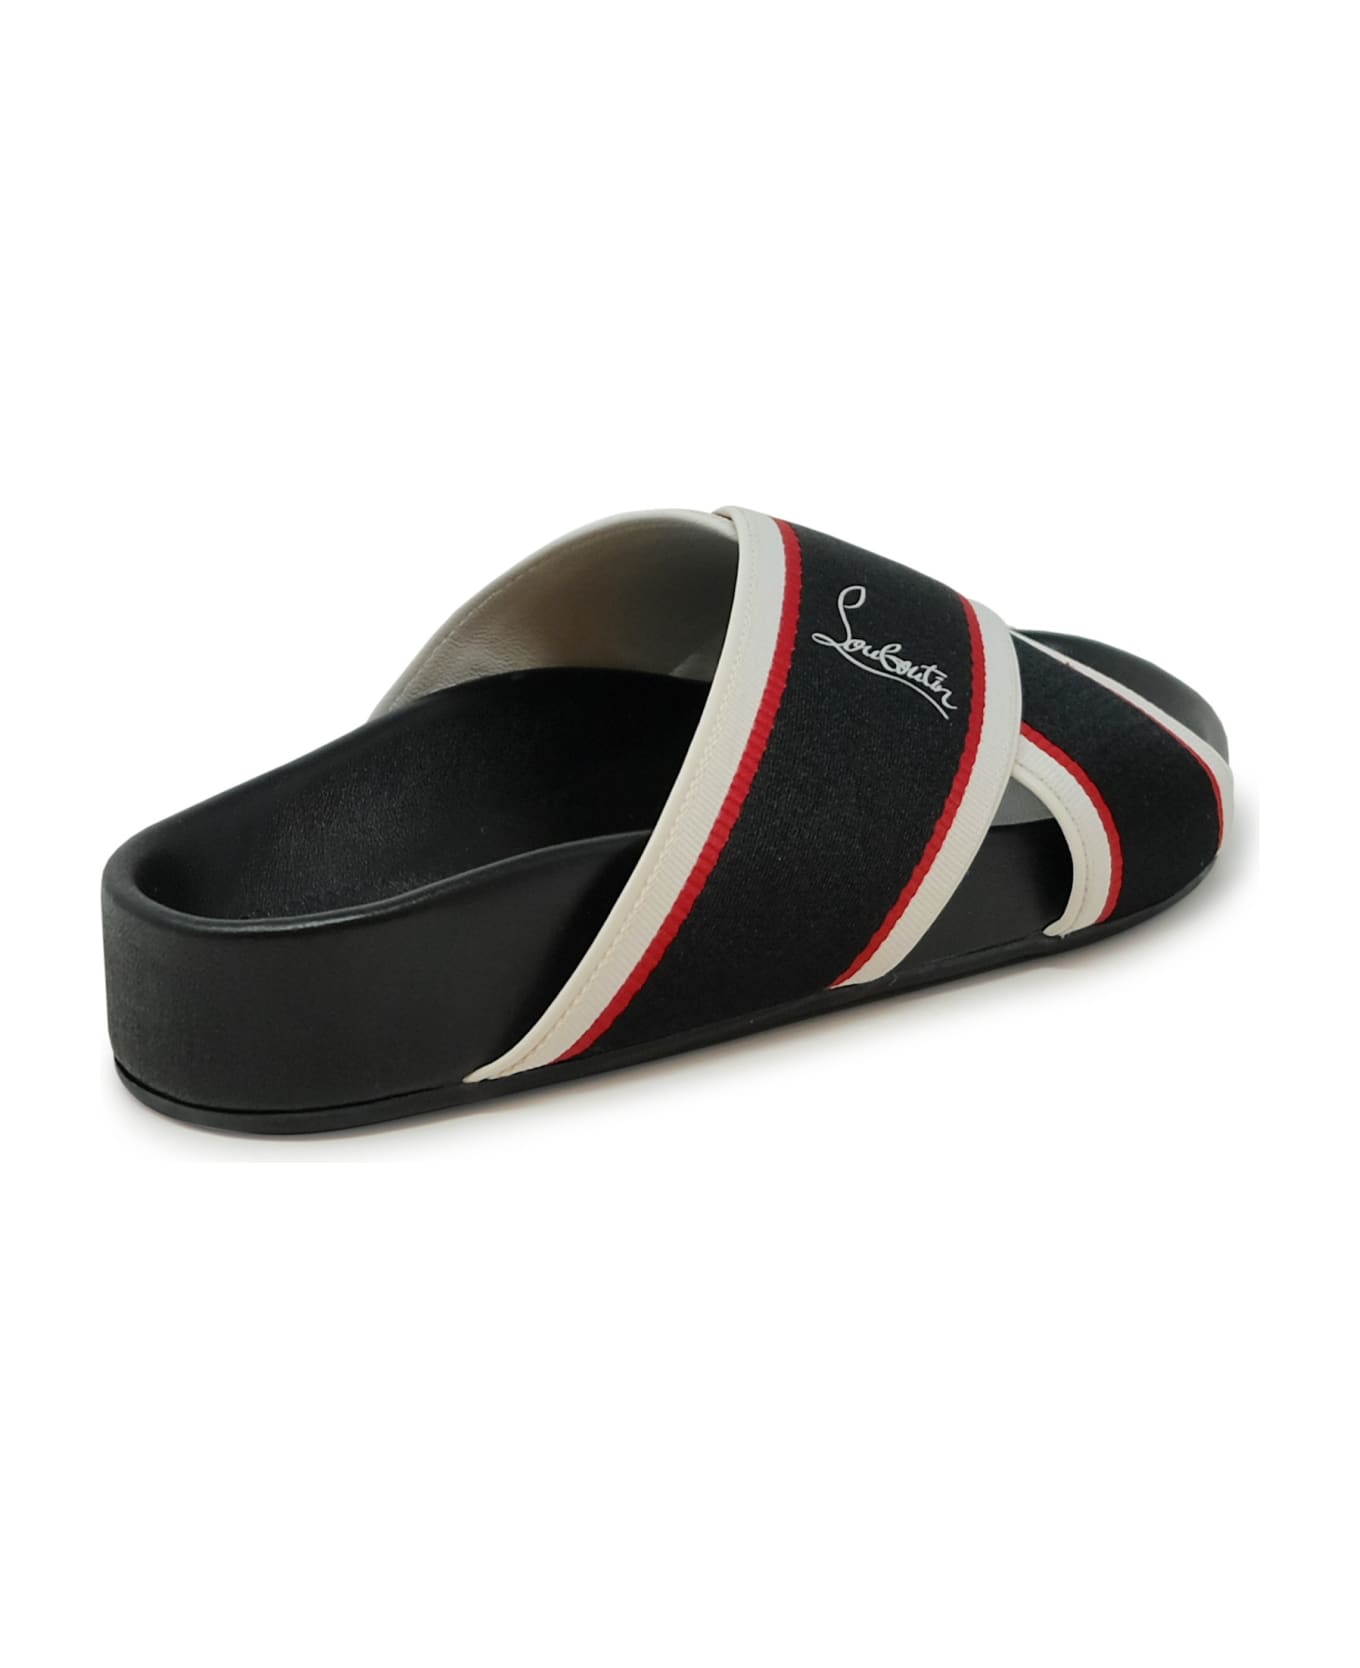 Christian Louboutin Hot Cross Bizz Sandals - Black サンダル